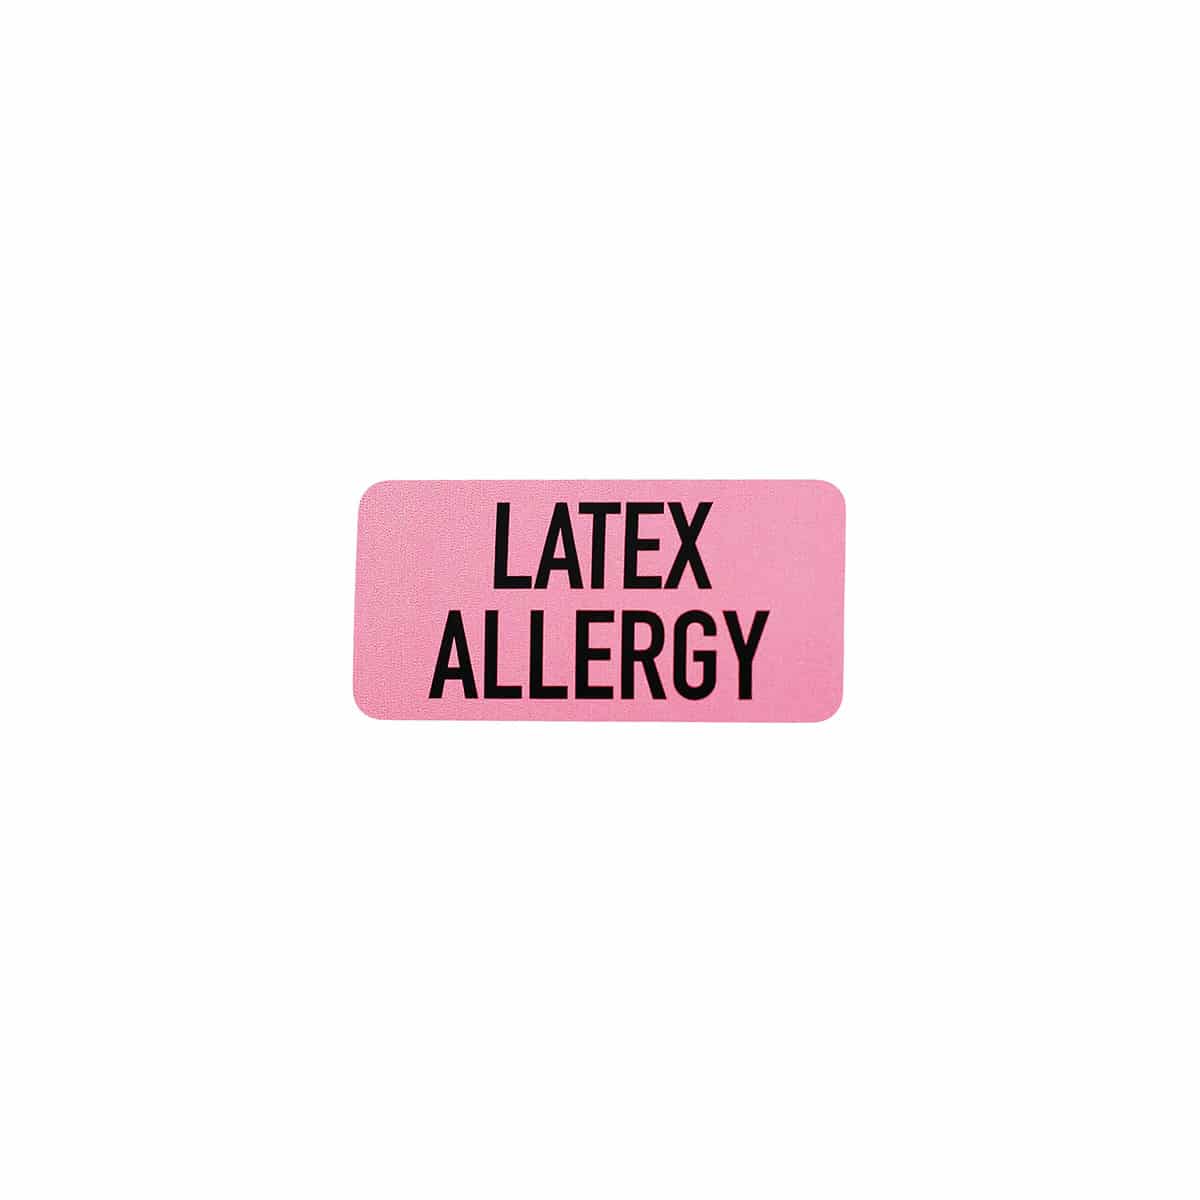 Latex Allergy No Latex Label / Sticker - White Reflective - US Made